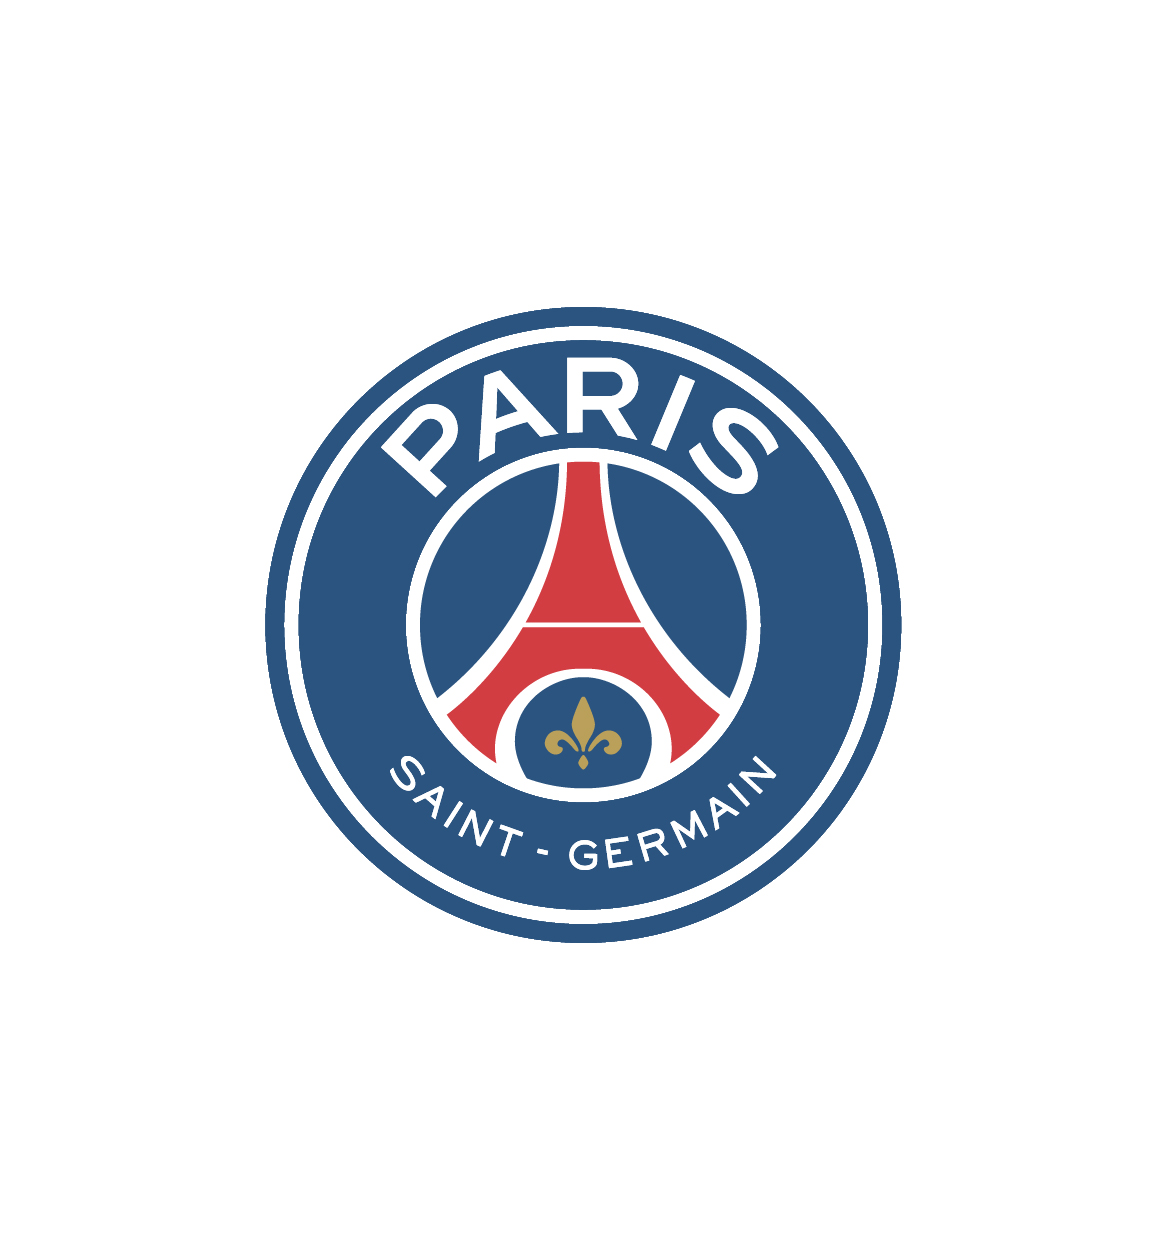 Free Download Paris Saint Germain Logo In Svg Png Jpg Eps Ai Formats